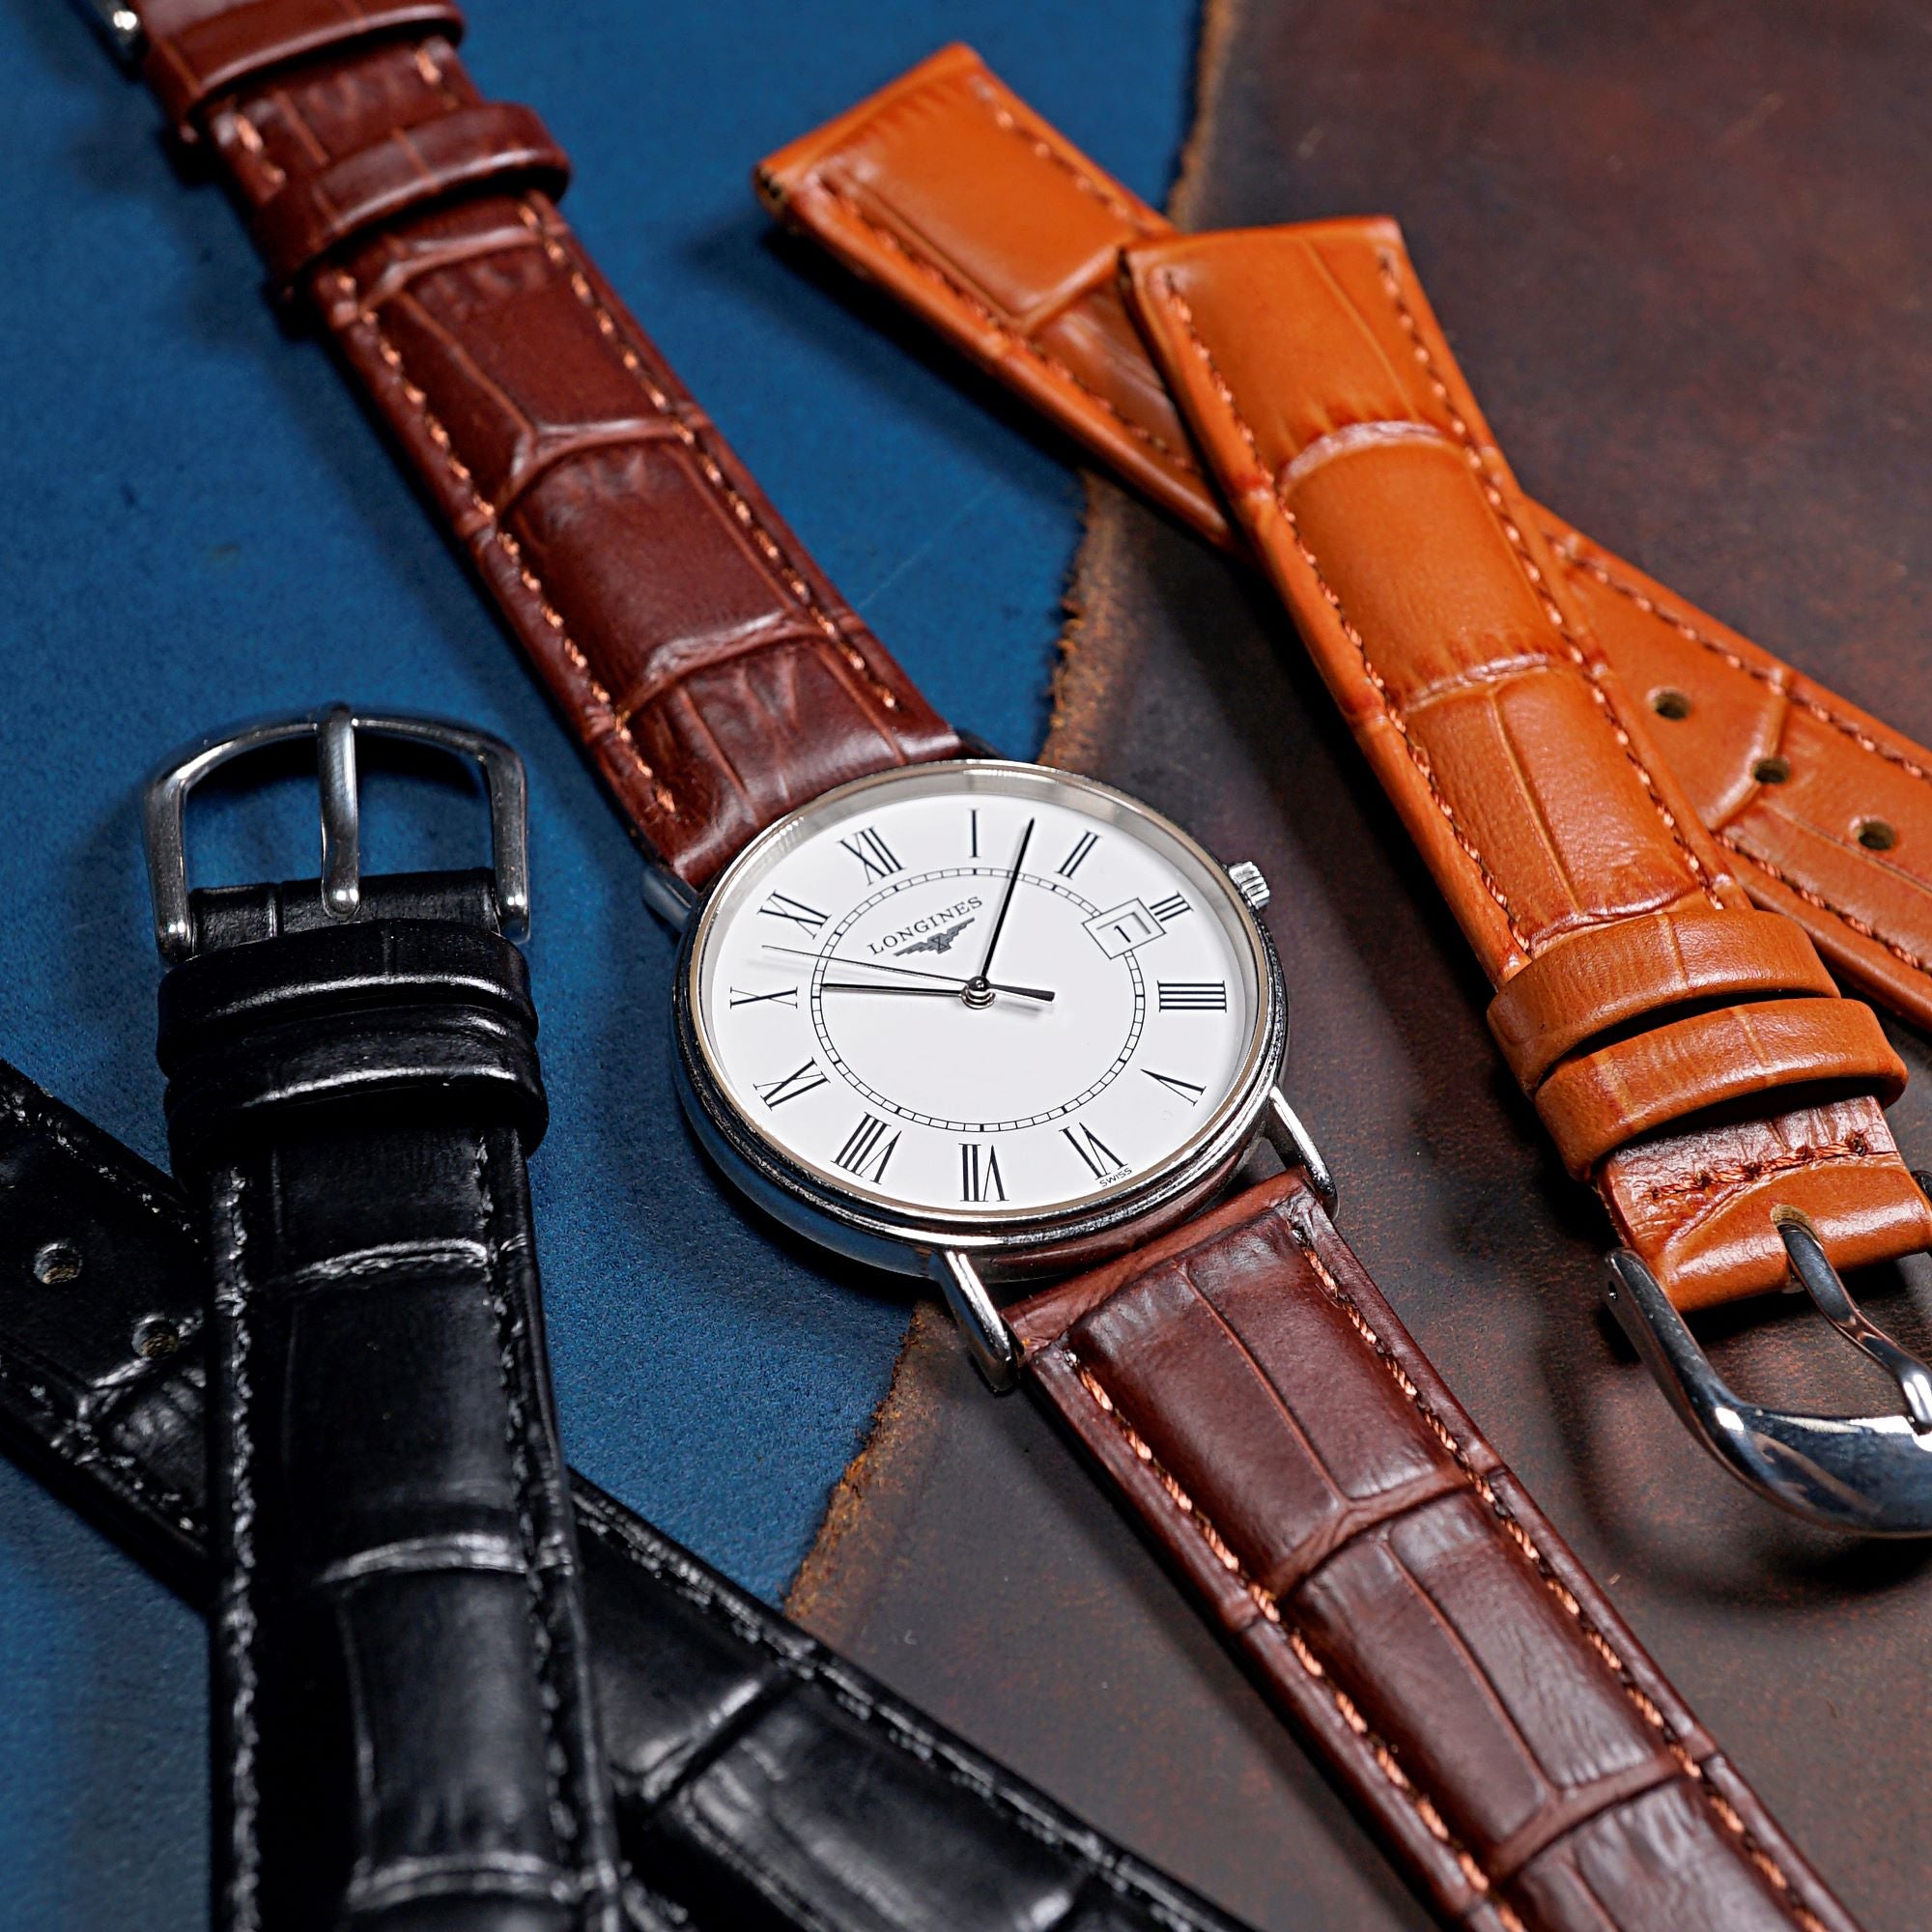 Genuine Croc Pattern Stitched Leather Watch Strap in Brown